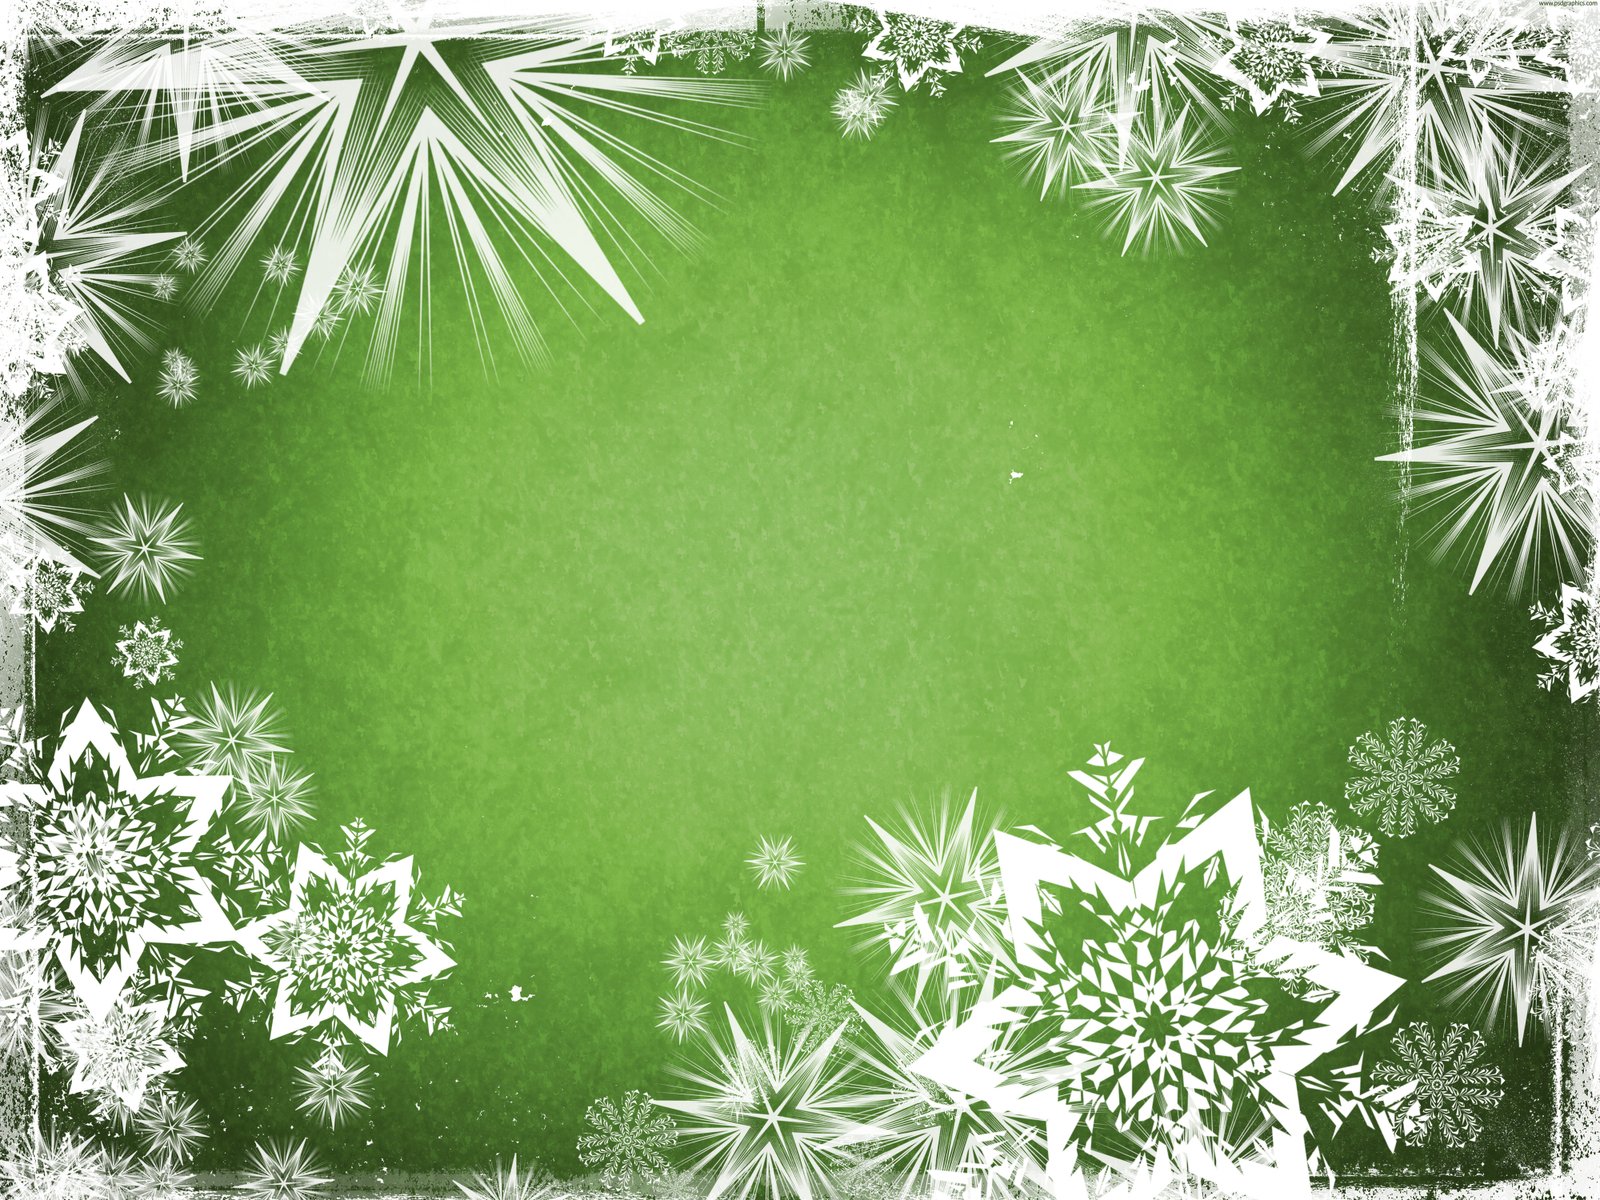 http://www.psdgraphics.com/file/green-christmas-background.jpg